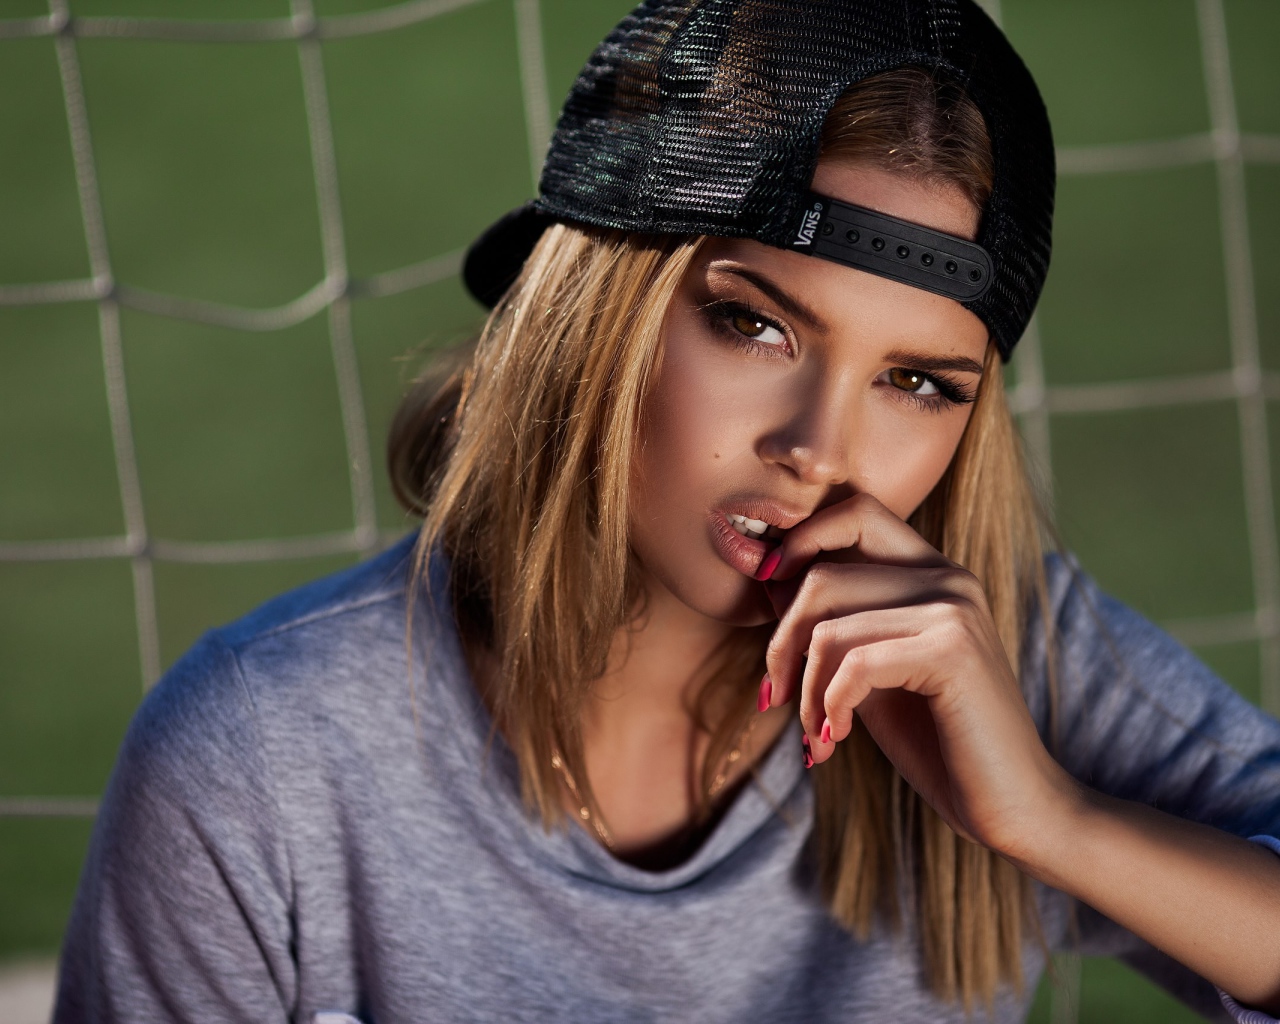 Girl athlete in a black cap